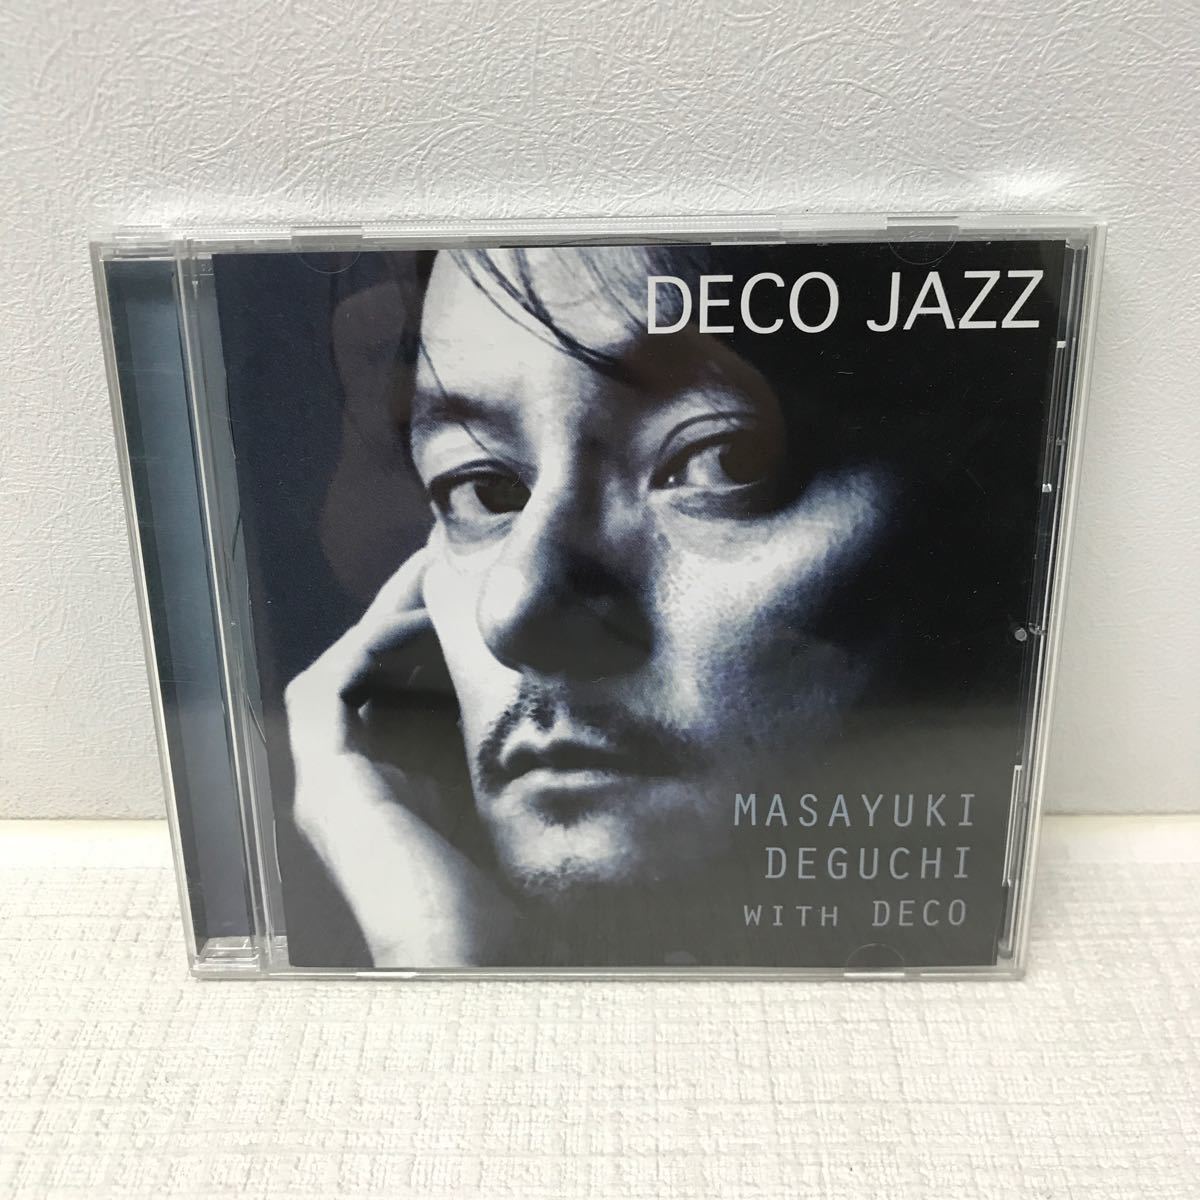 I1224E3 DECO JAZZ デコ・ジャズ MASAYUKIA DEGUCHI with DECO 出口雅之 CD 音楽 ジャズ JAZZ / BACKSEAT BUTTERFLY / 抱きしめたい 他_画像1